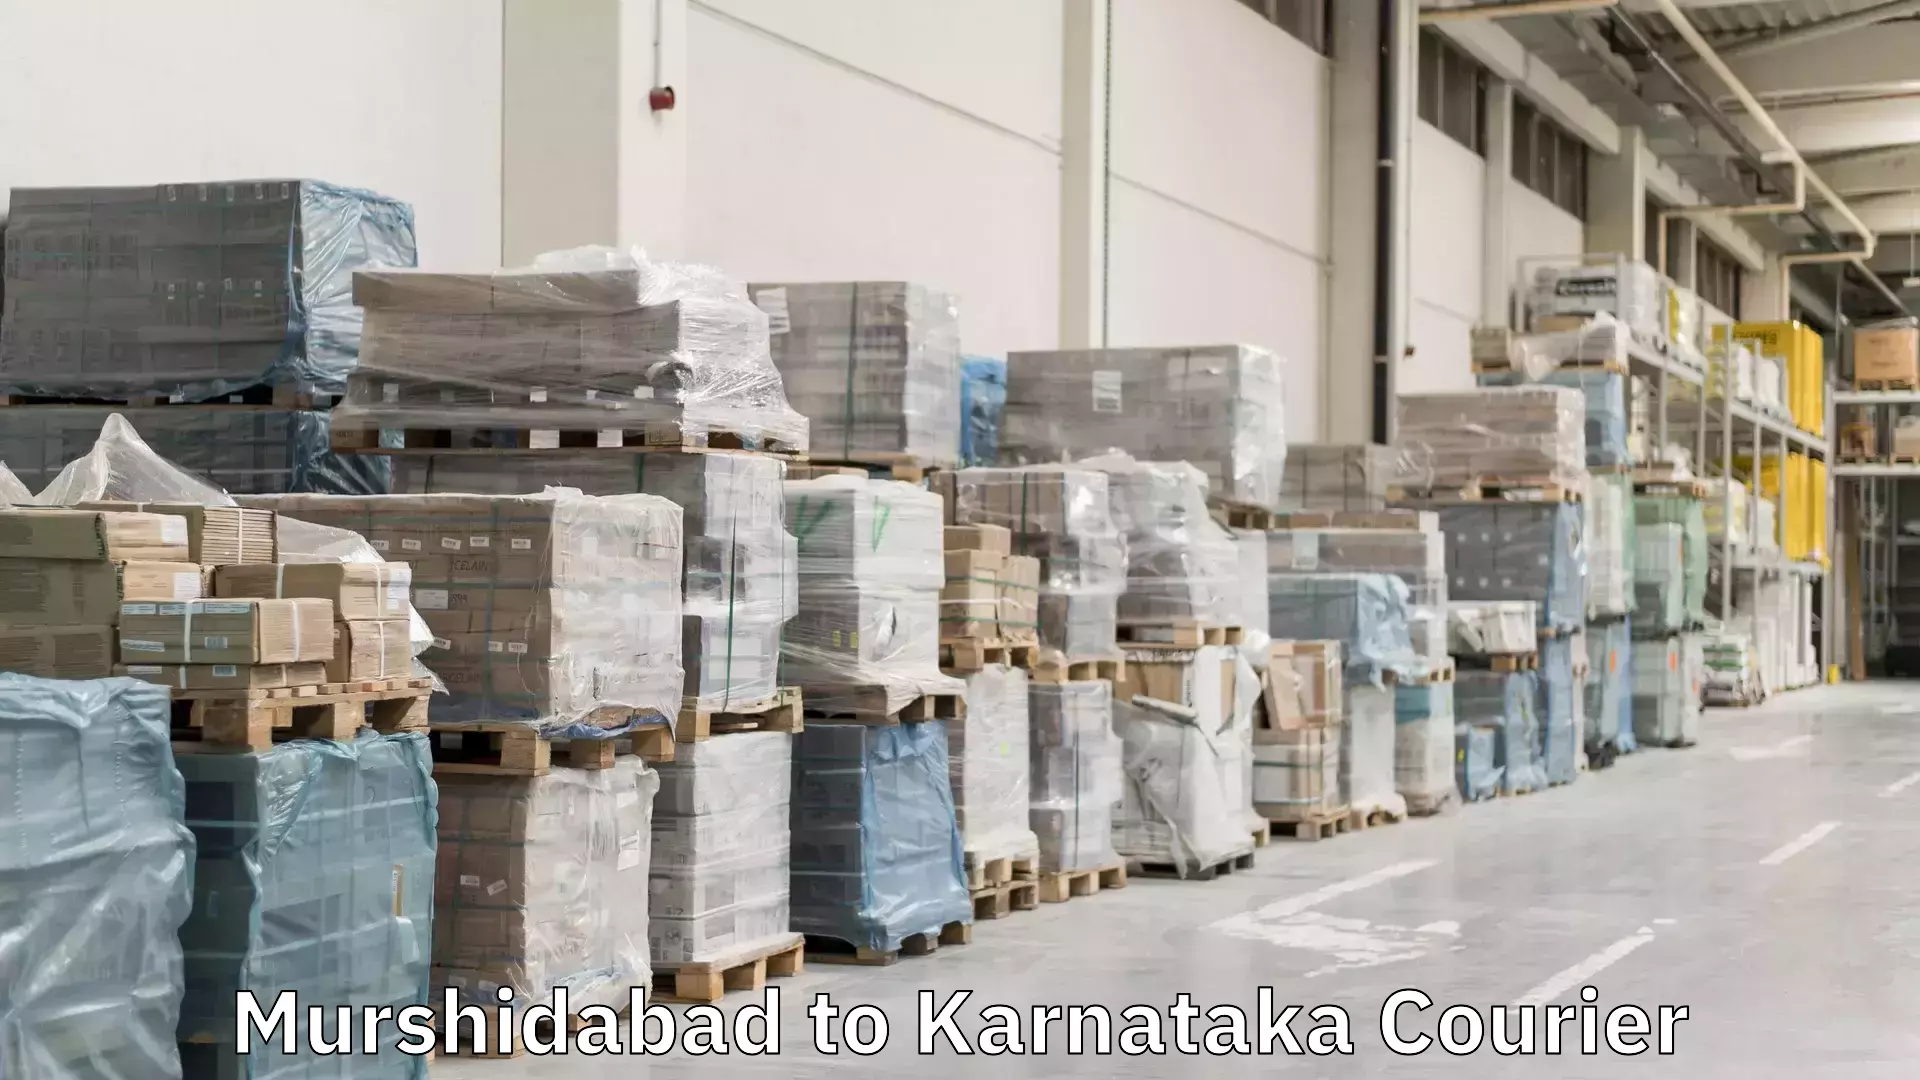 Express delivery capabilities Murshidabad to Karnataka